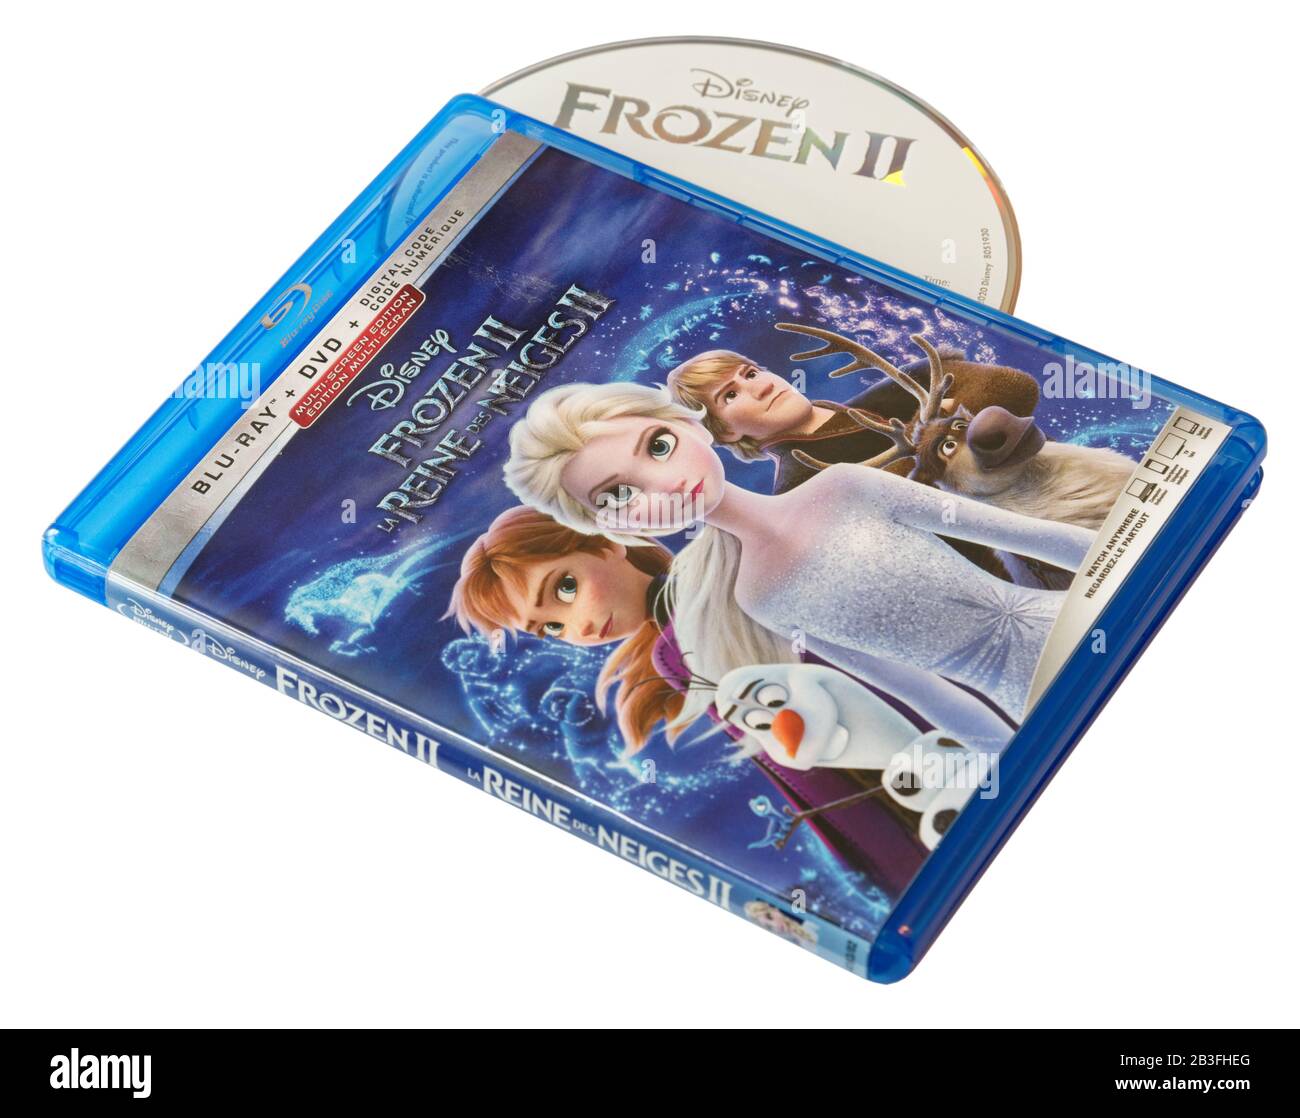 Frozen 2 DVD Stock Photo - Alamy